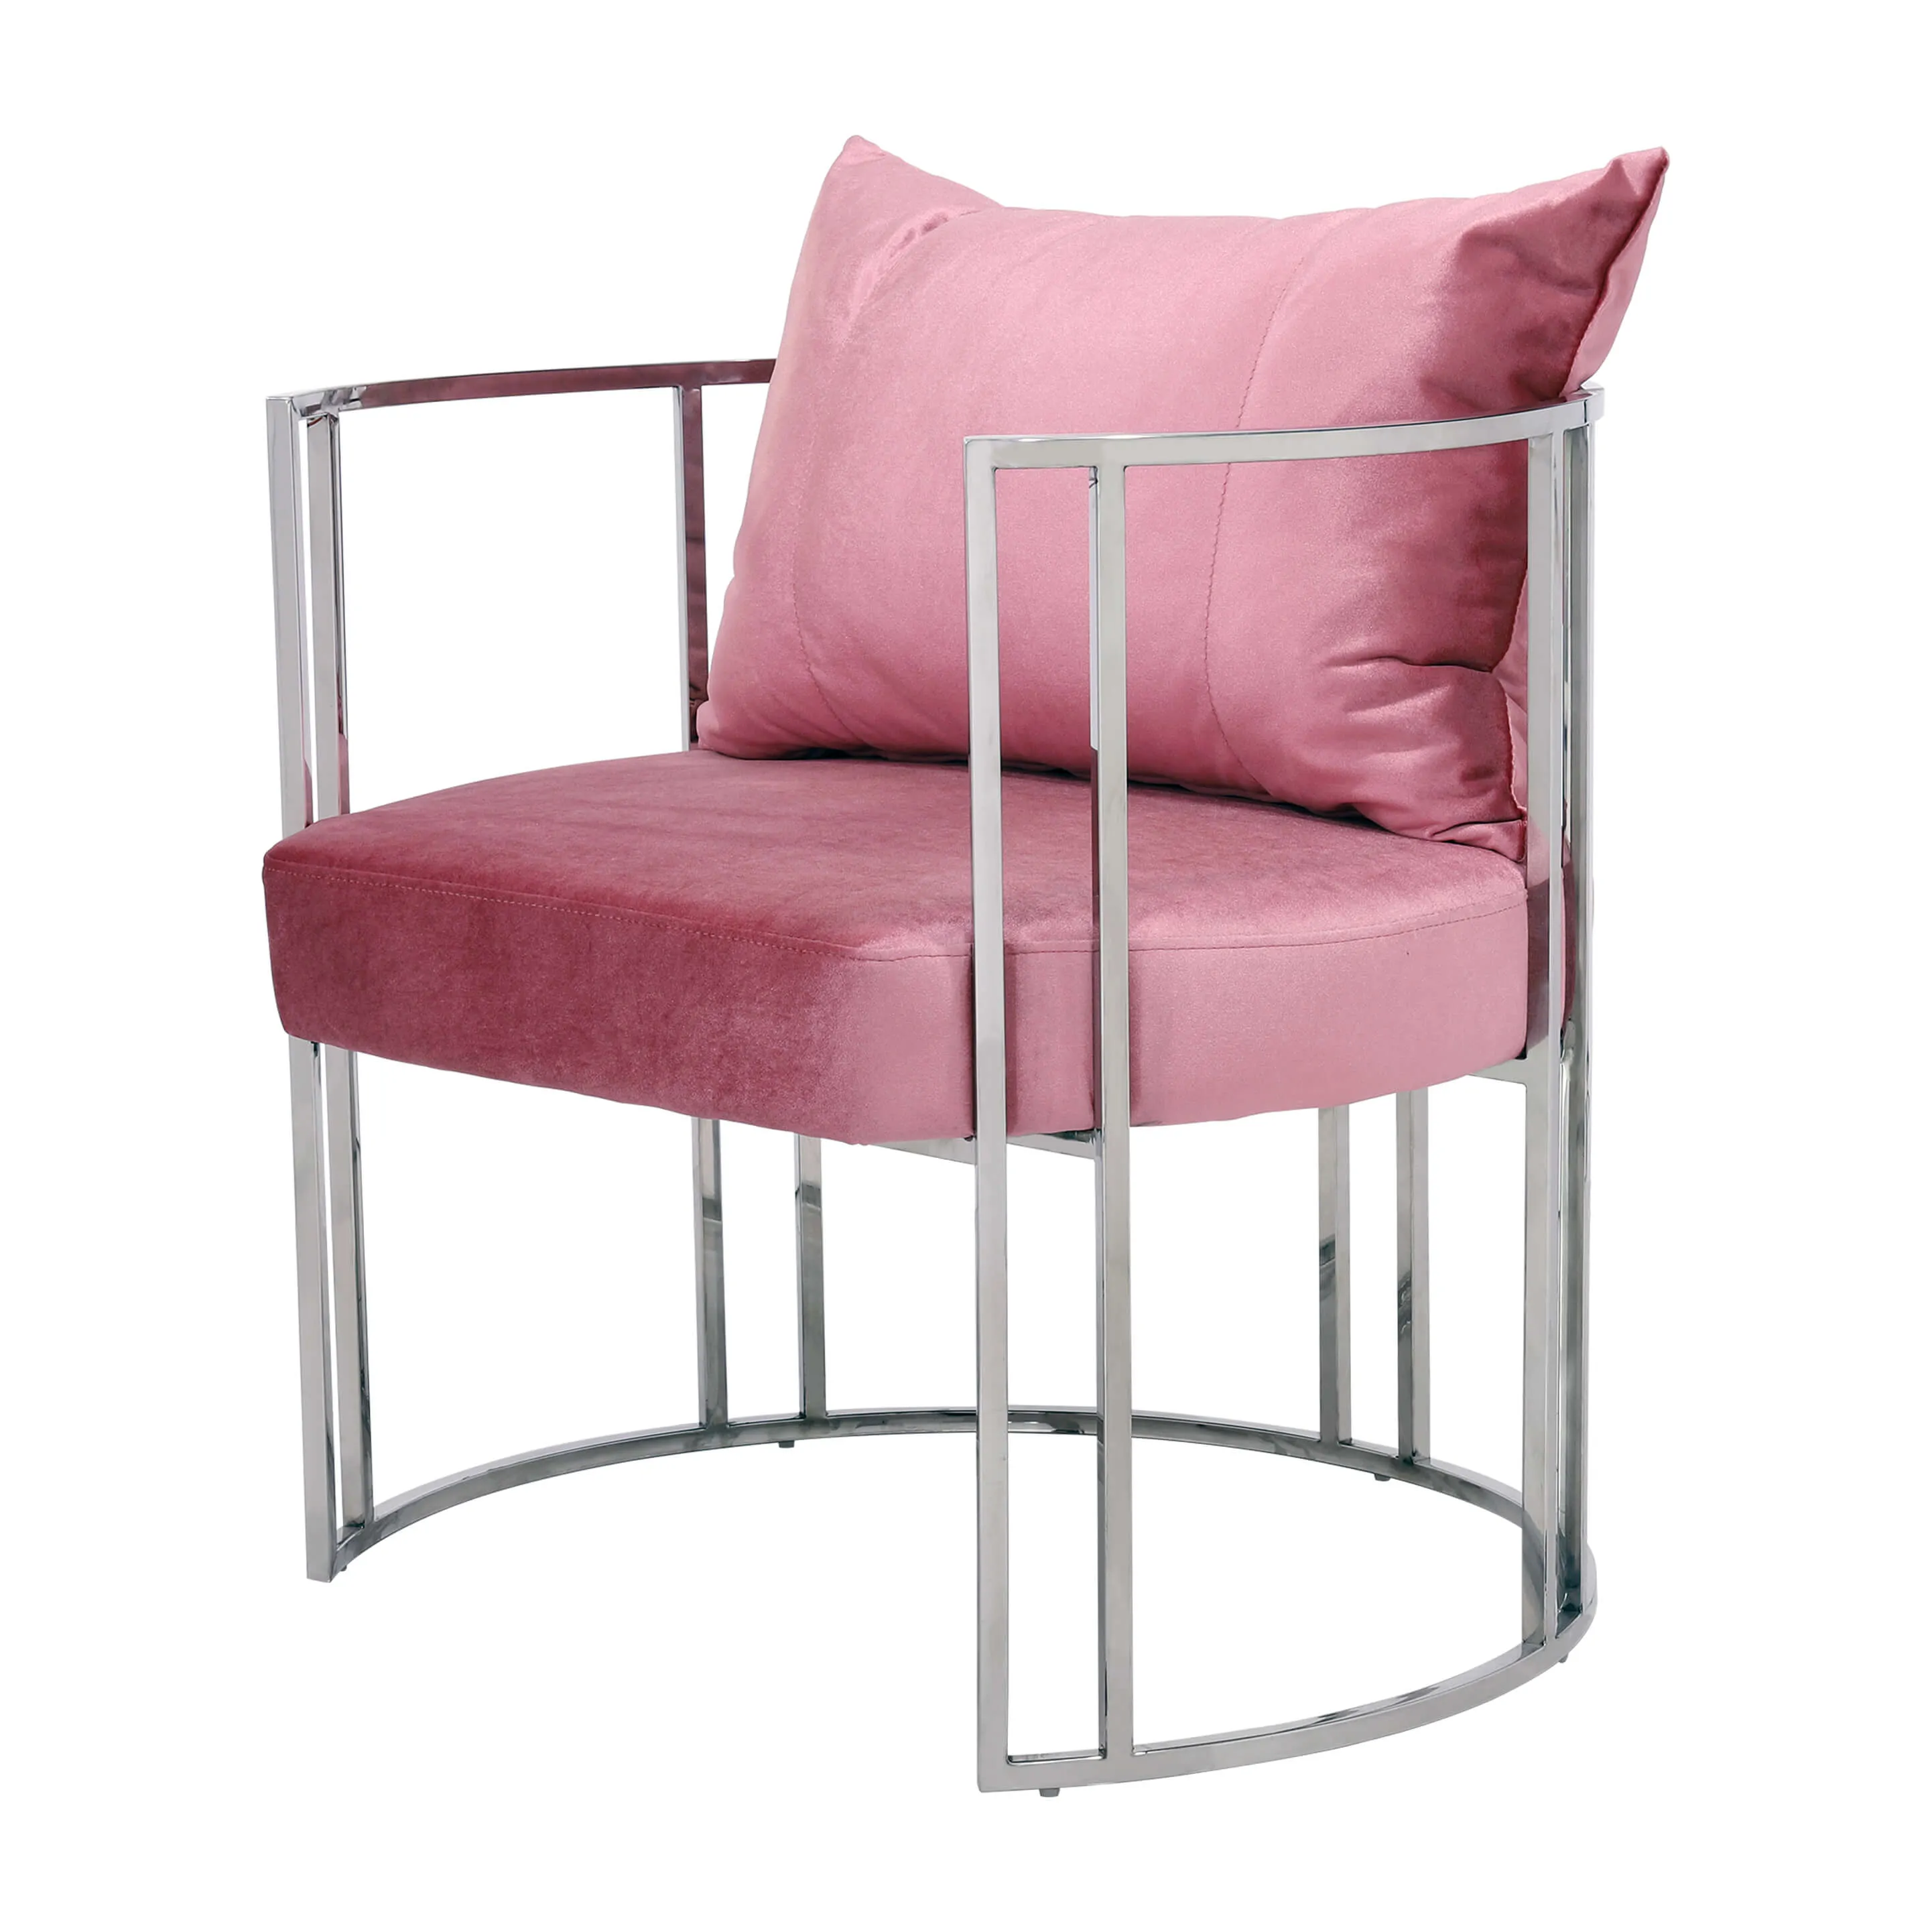 Adm - Poltrona 'new Decò Serie Luxury' - Colore Rosa